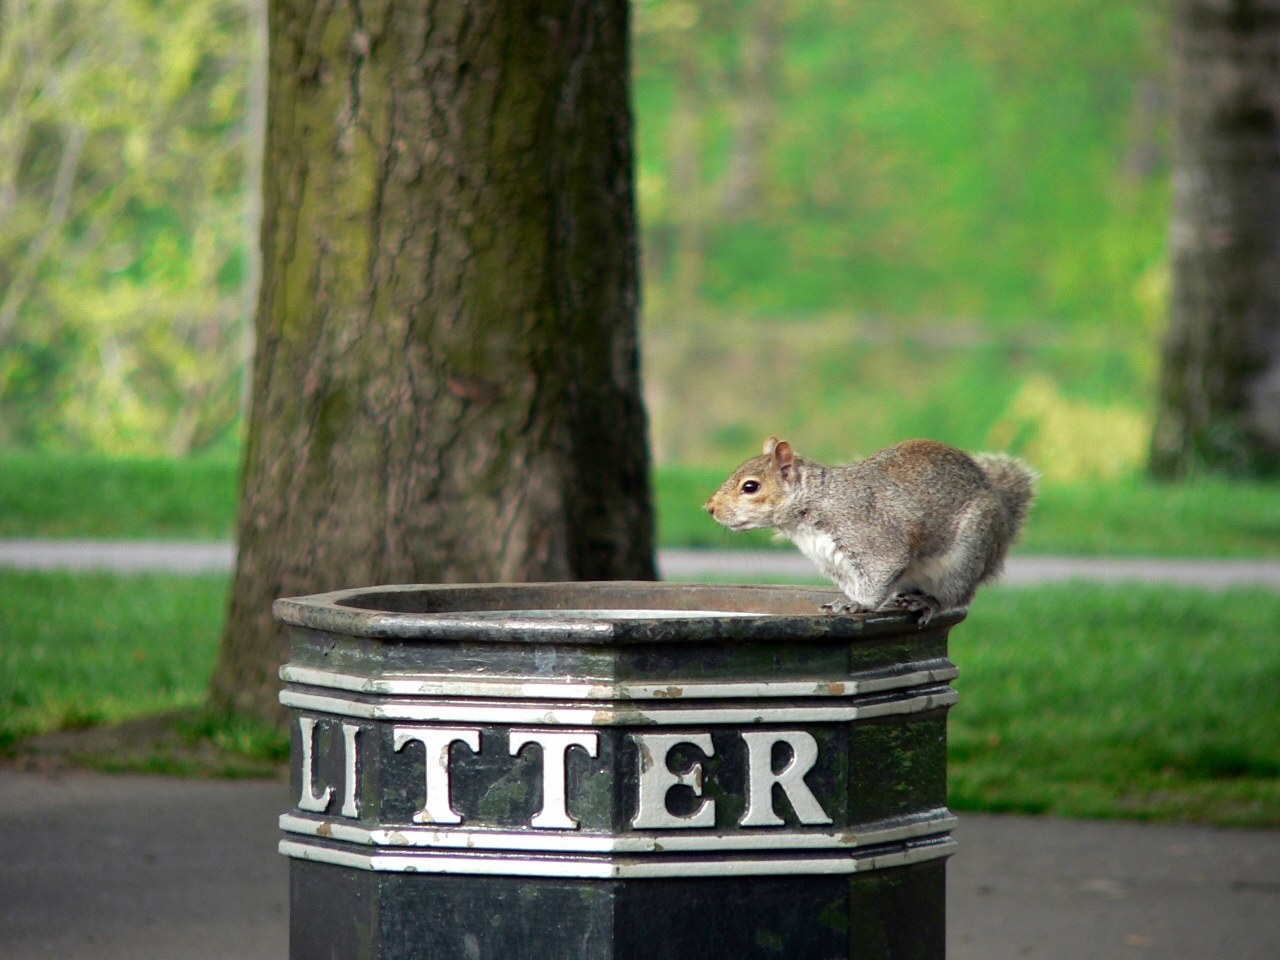 Squirrel sat on a litter bin